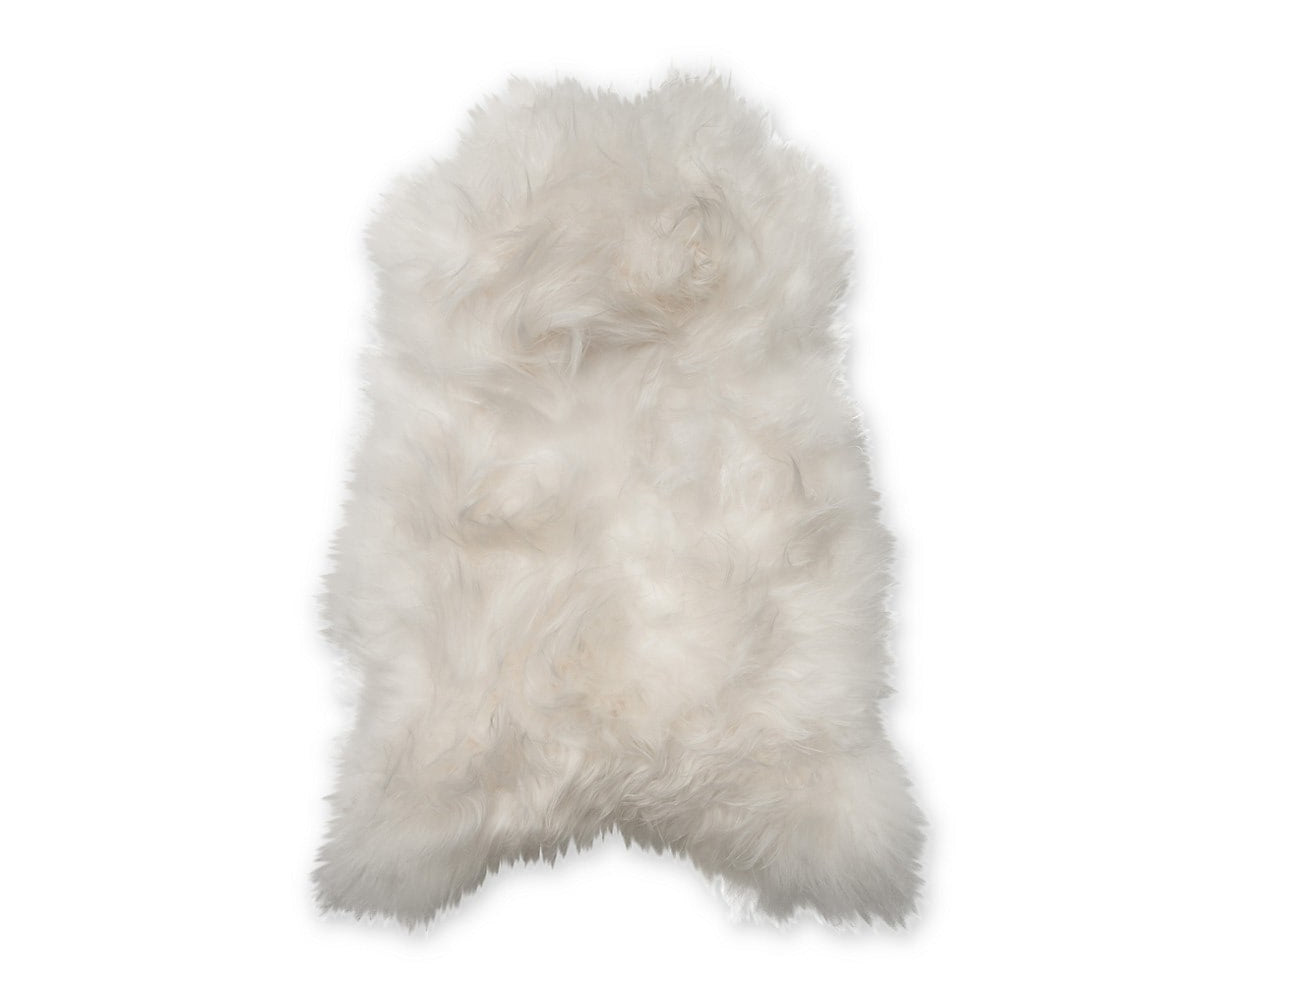 Natural Premium, Sustainable, Hypoallergenic, Long hair Premium Sheepskin Fur Area Rug